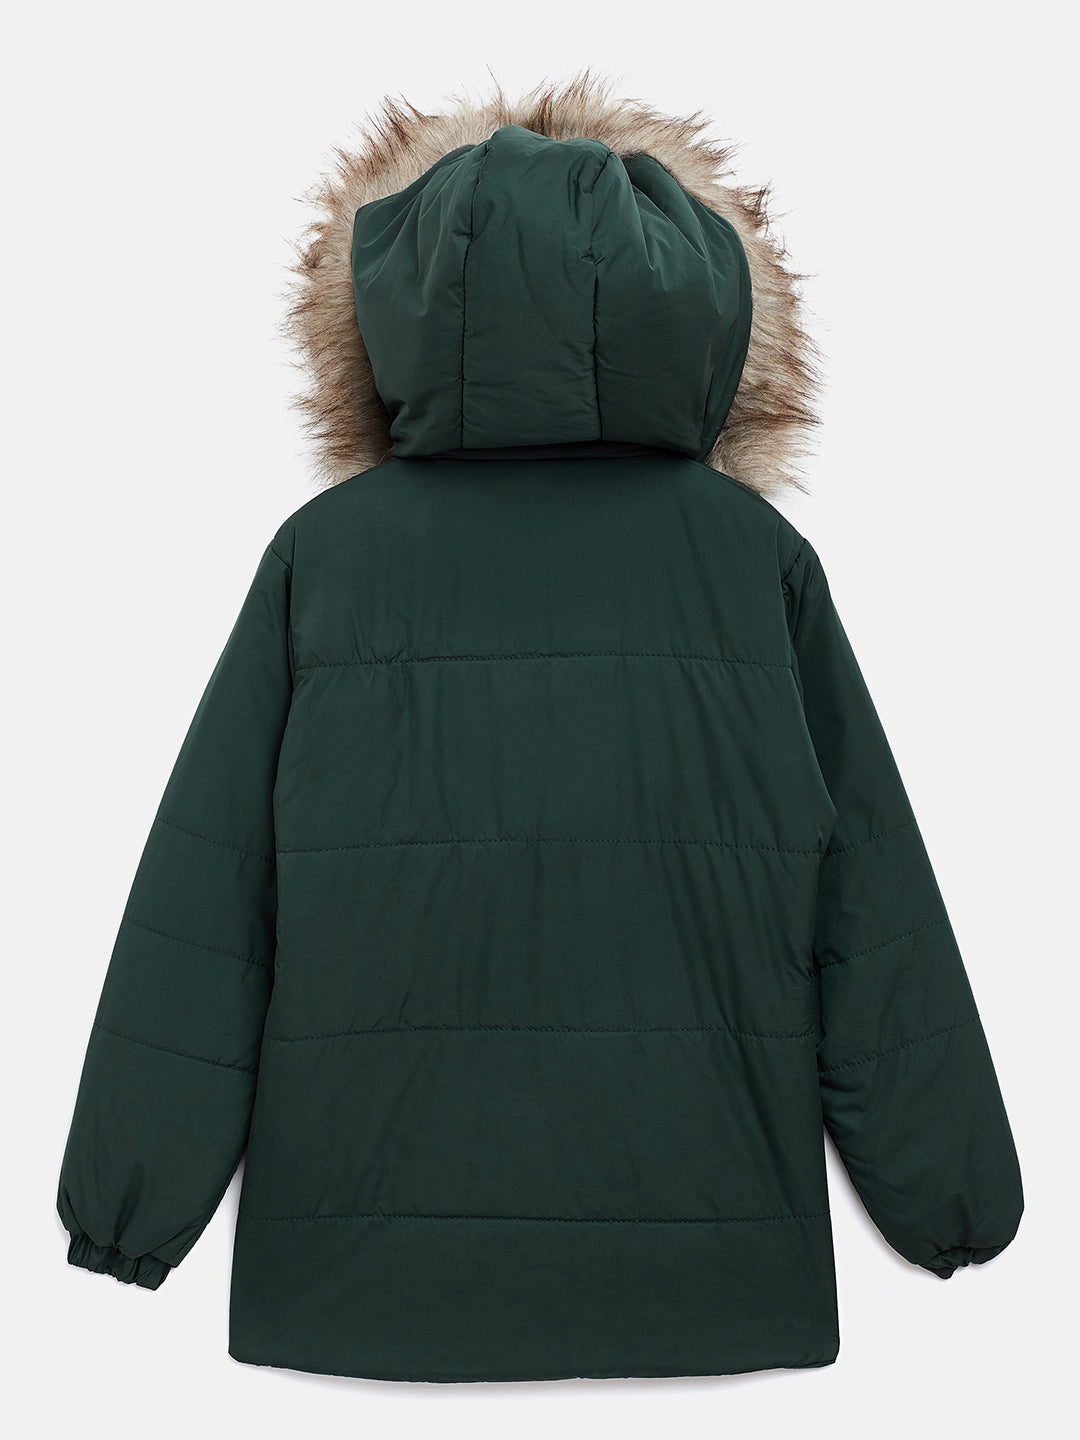 Green Detachable Hood Jacket - Girls Jackets